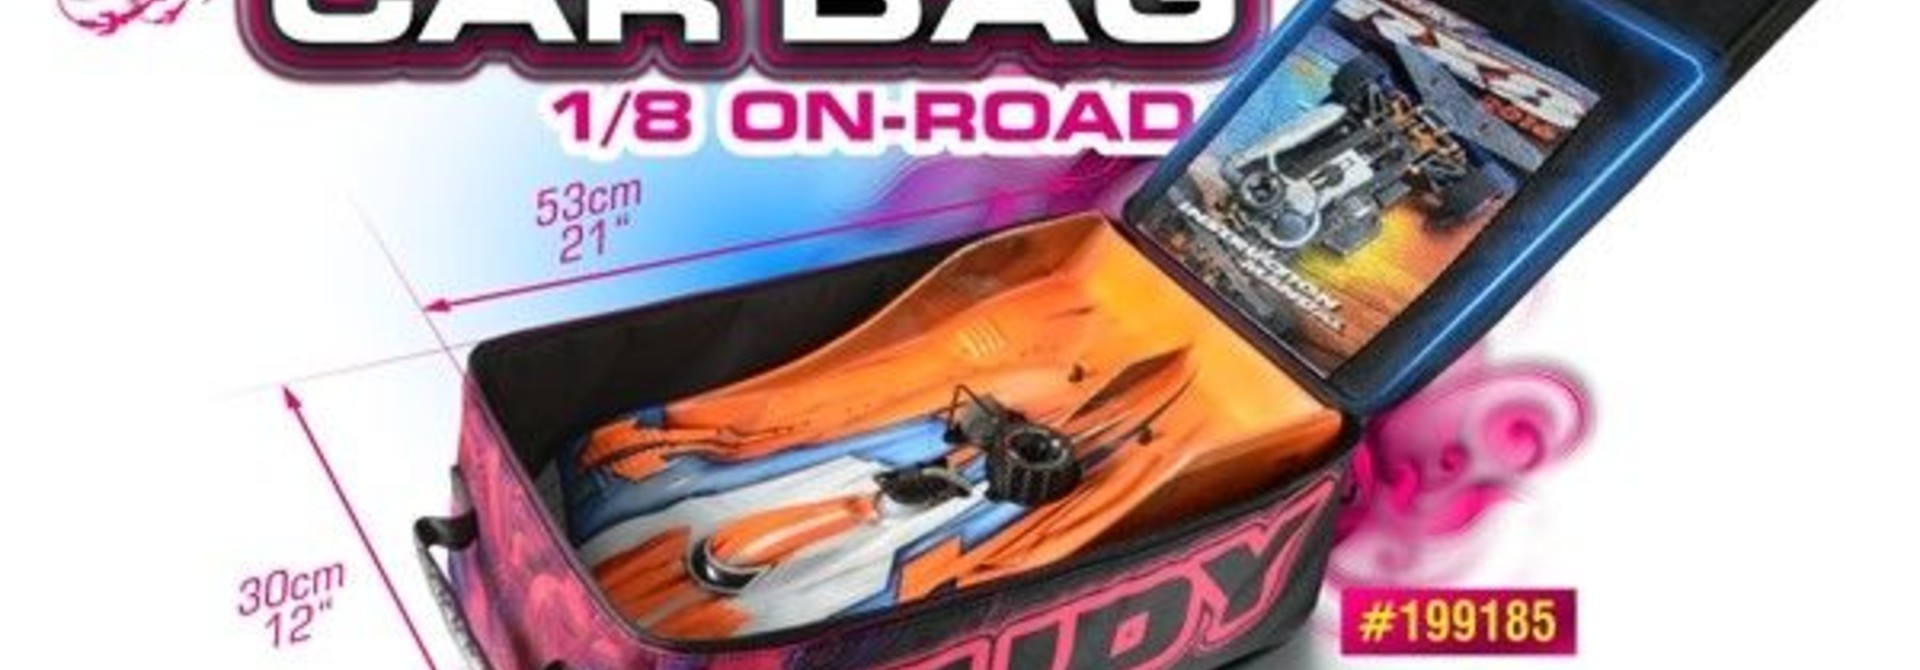 HUDY CAR BAG - 1/8 ON-ROAD. H199185